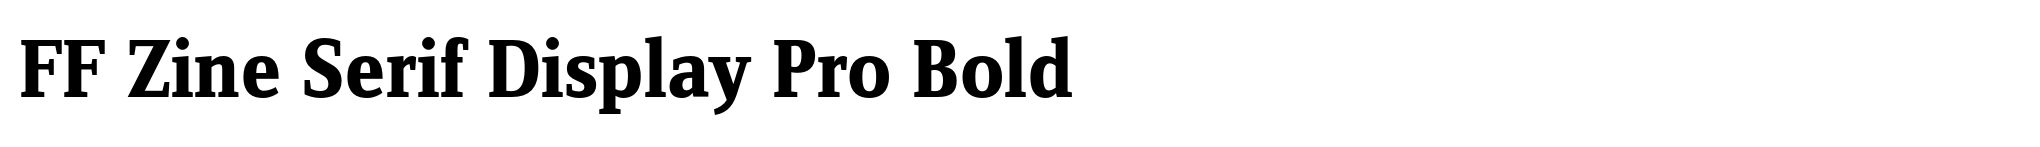 FF Zine Serif Display Pro Bold image